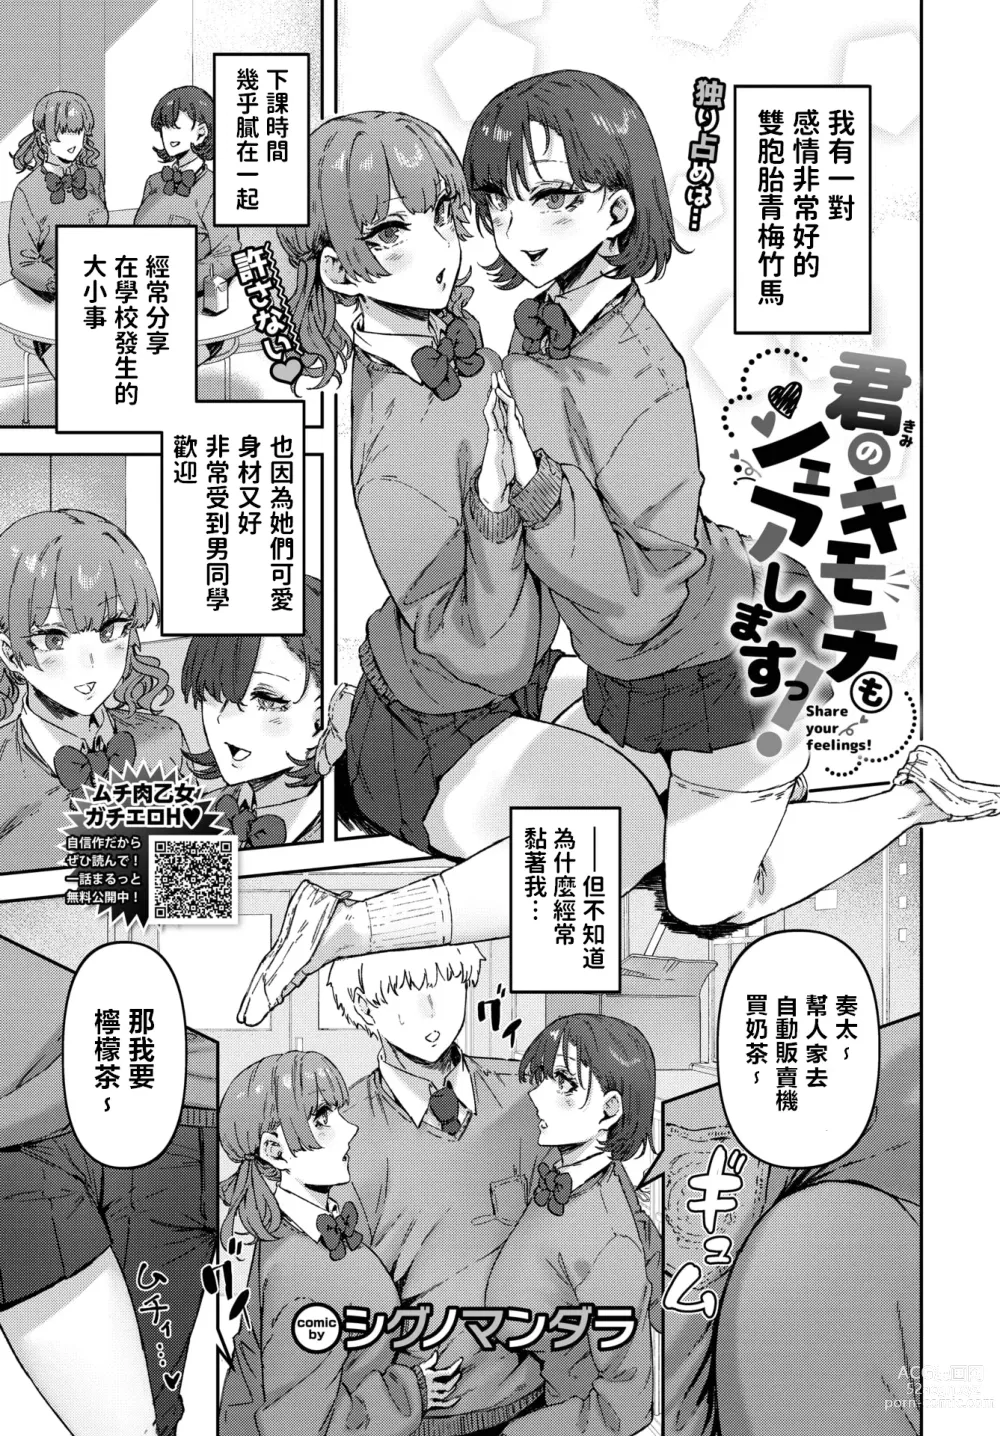 Page 1 of manga Kimi no Kimochi mo Share Shimasu! - Share your feelings!